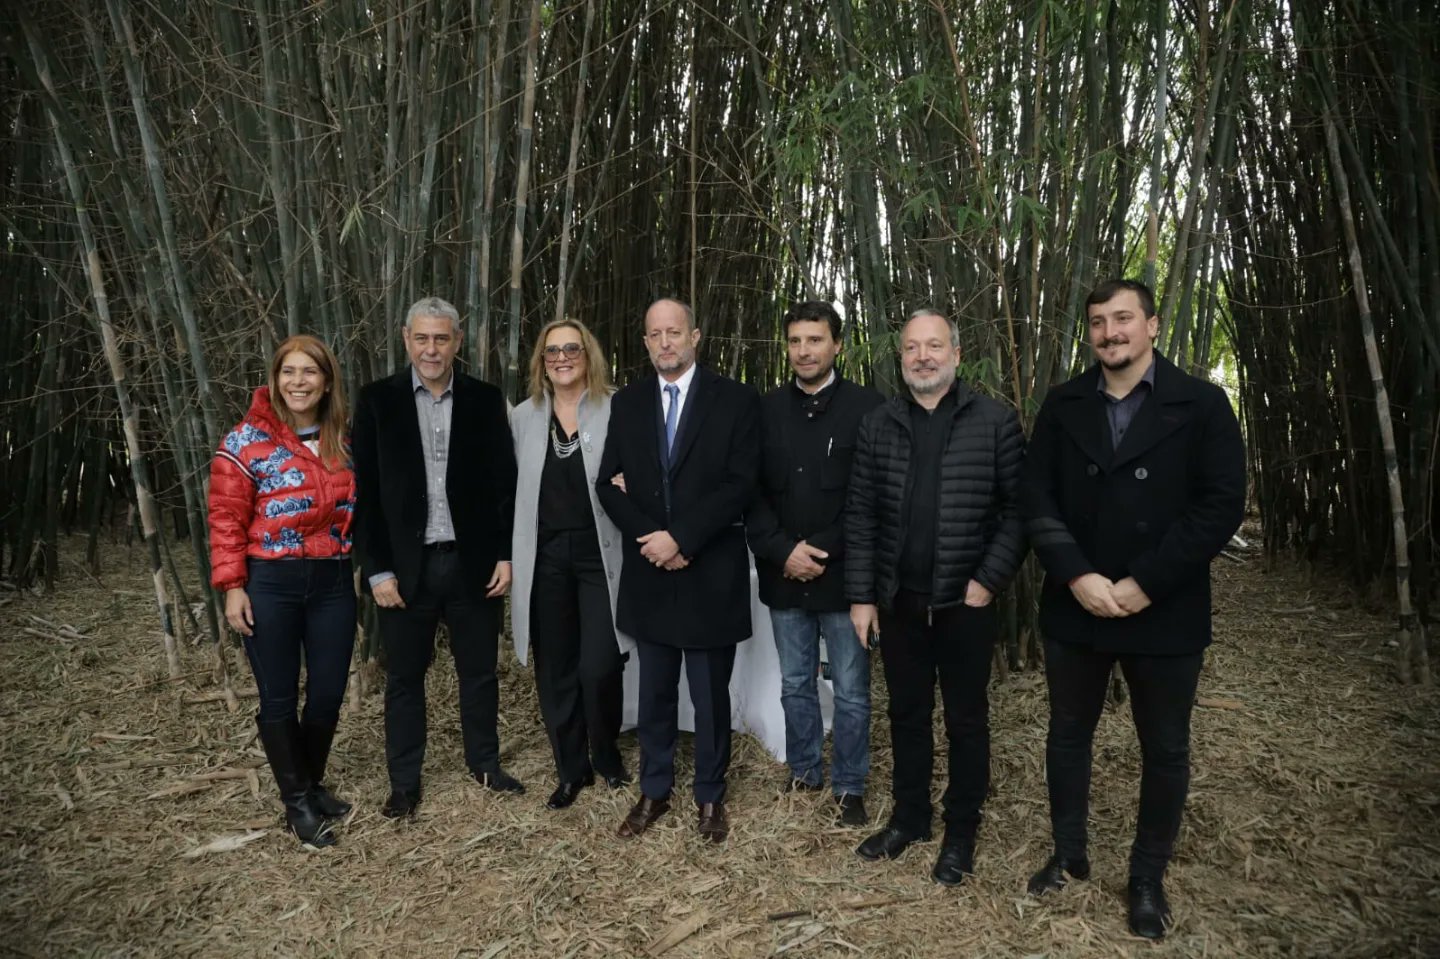 Ferraresi e Insaurralde participaron de la inauguración del invernadero “Azucena Villaflor” en Villa Domínico